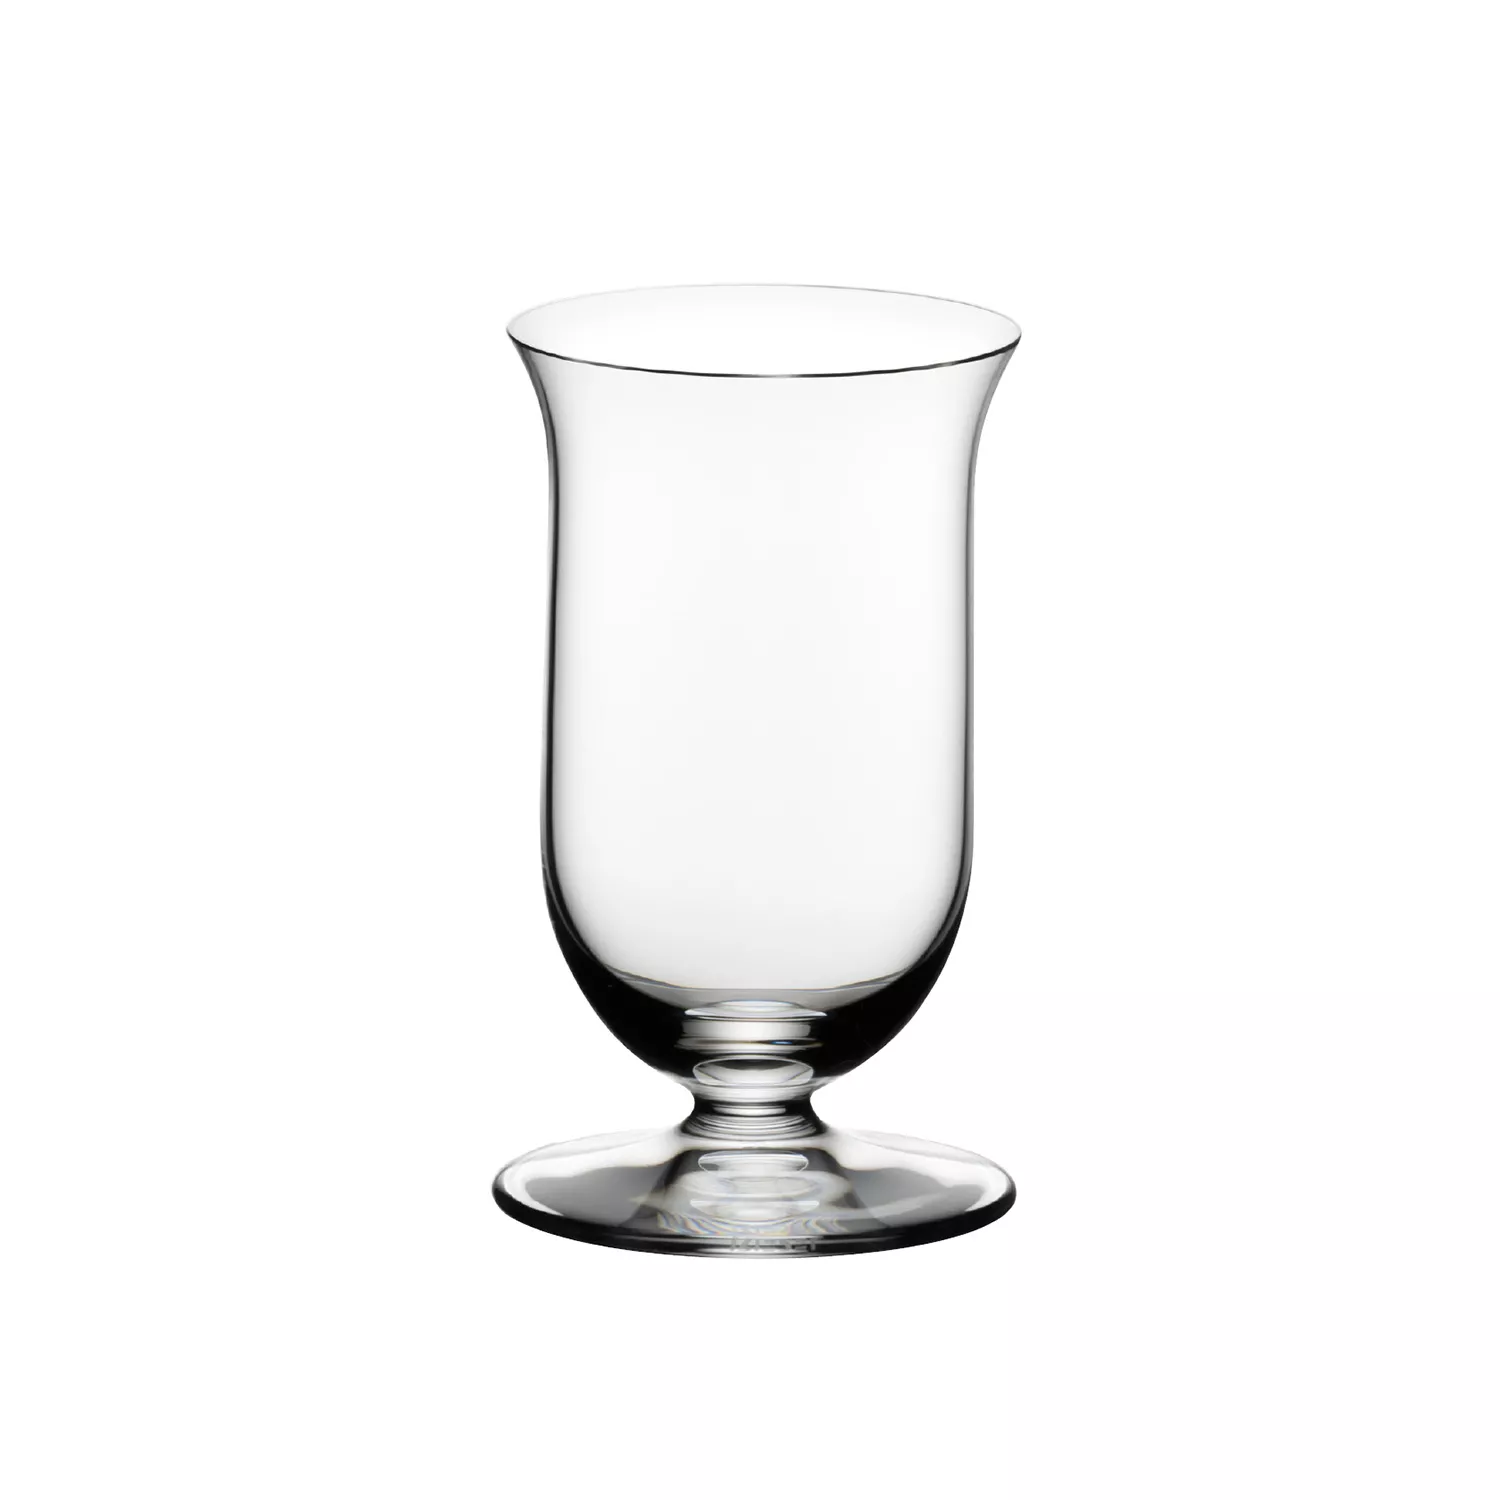 RIEDEL Vinum Single Malt Whisky Glass, Set of 2